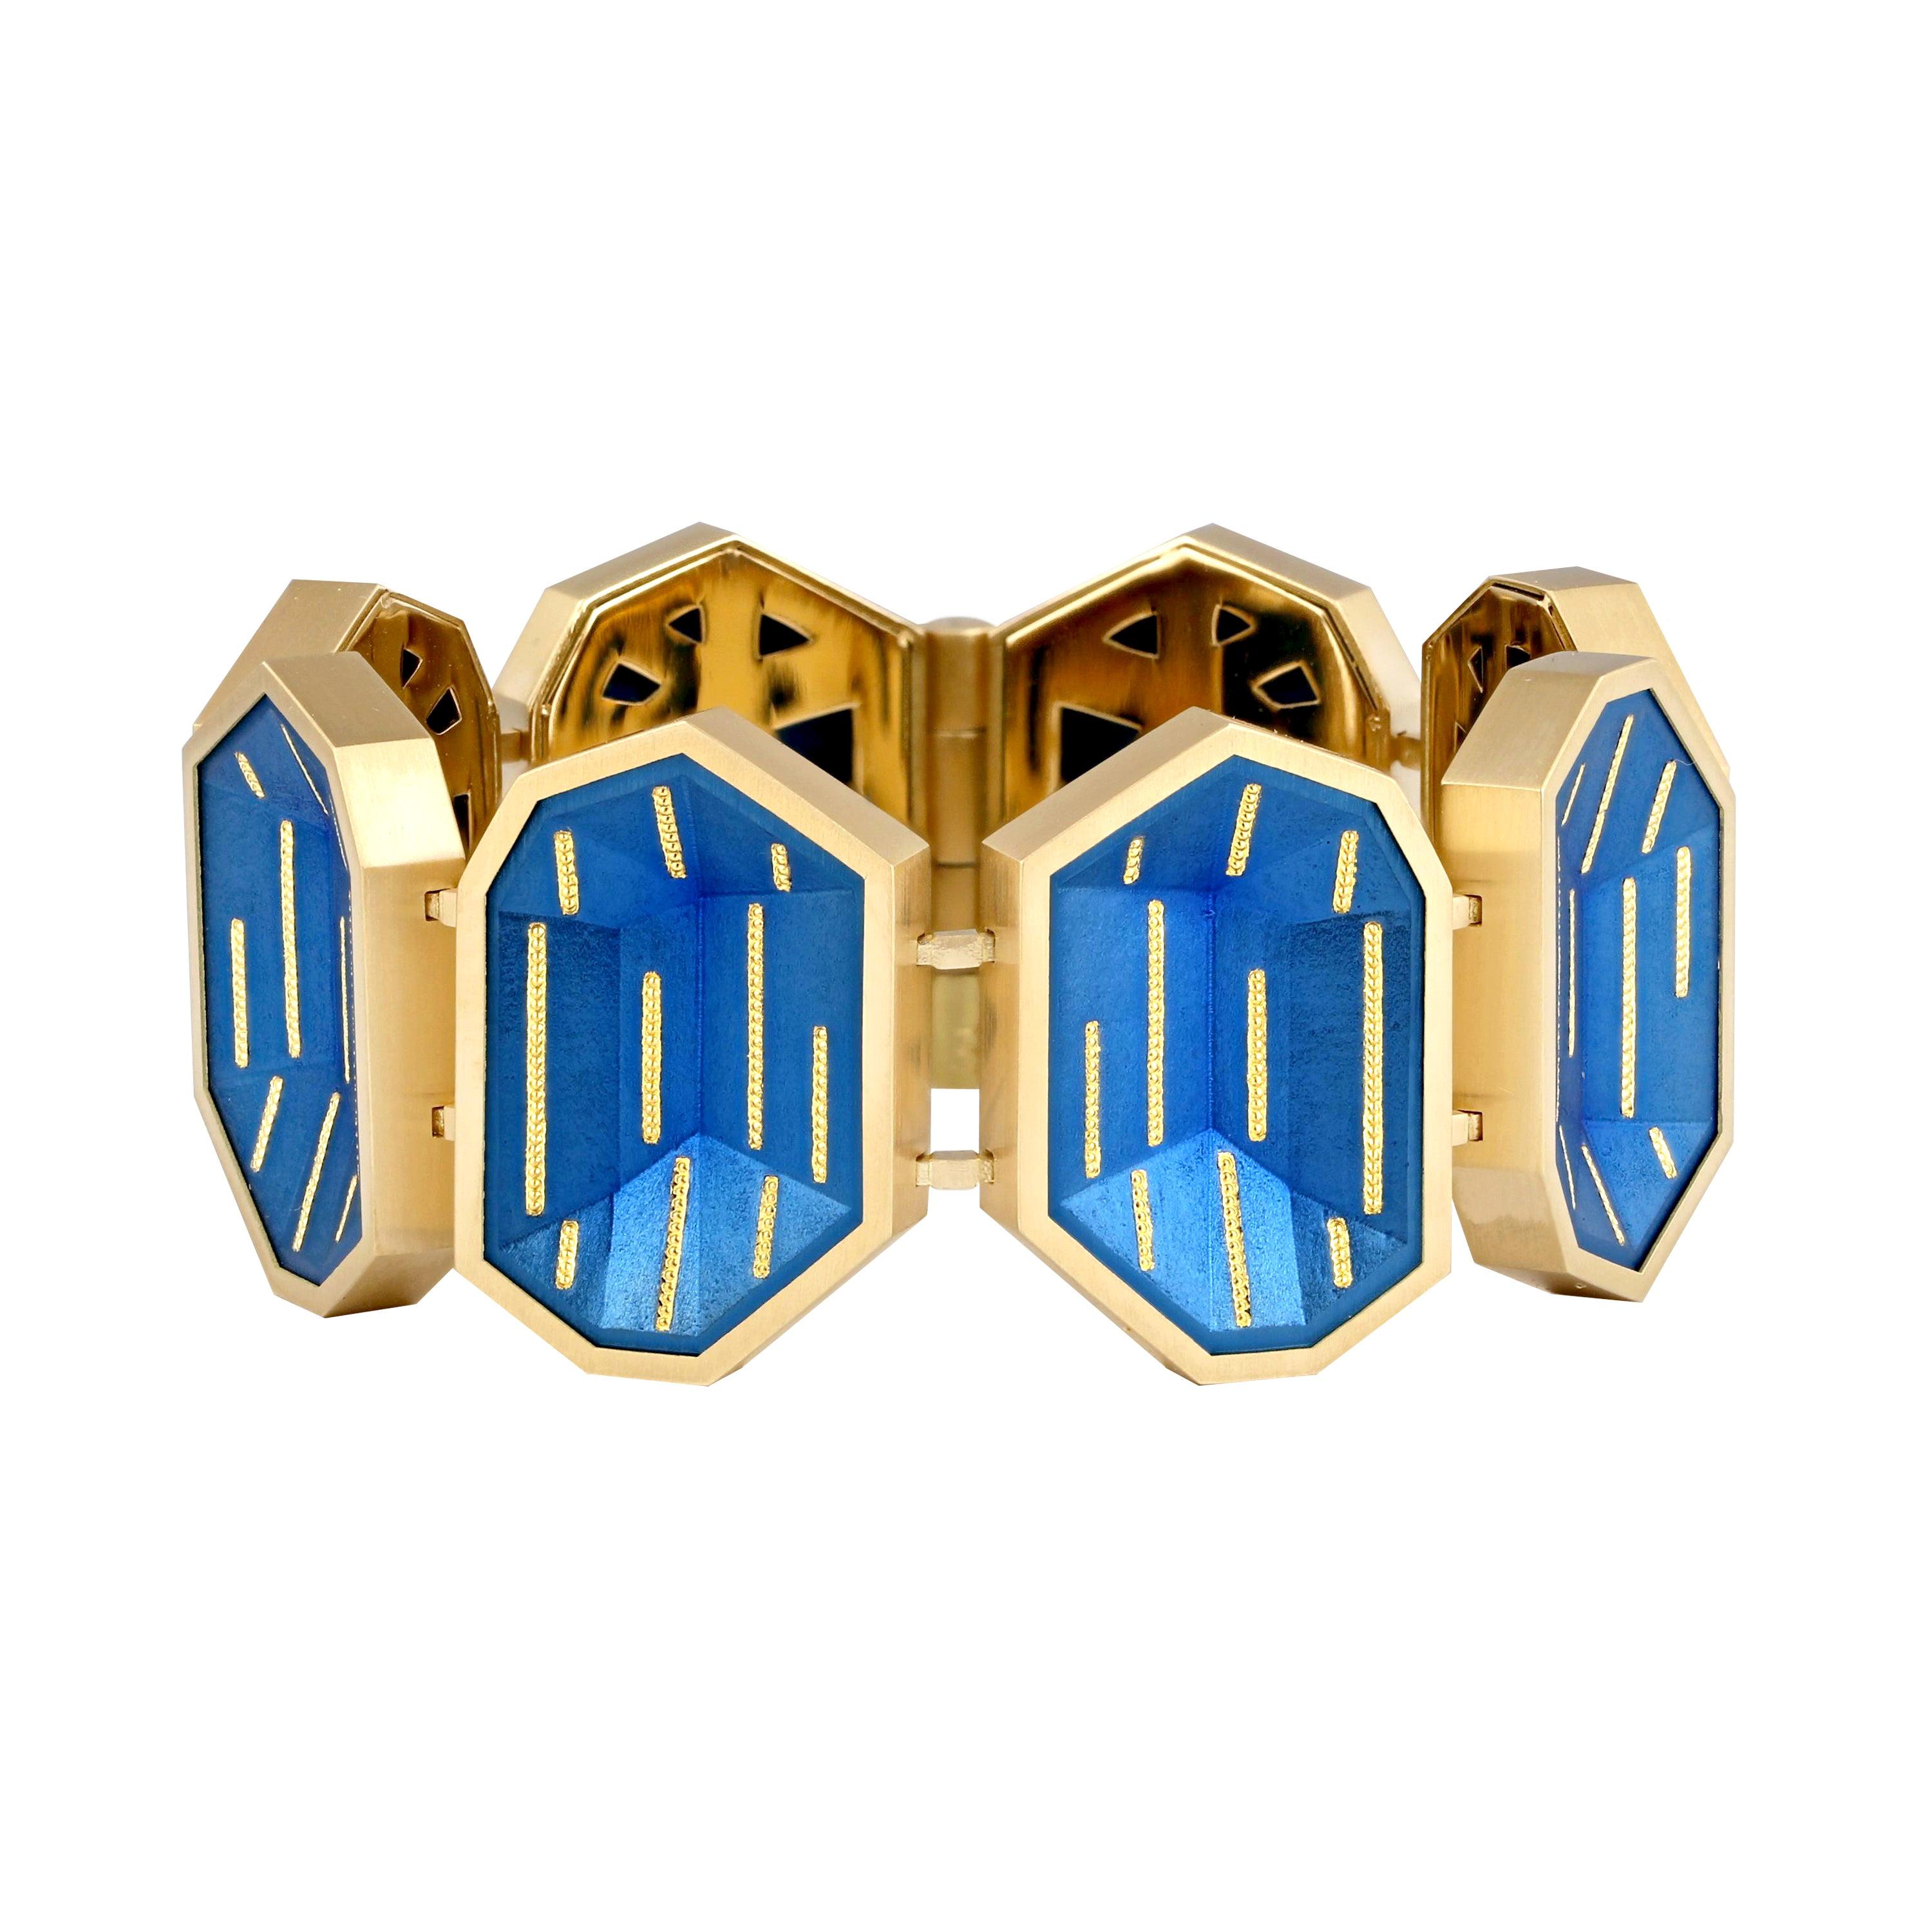 Geometric Cobalt Blue Steel and Gold bracelet by Zoltan David For Sale